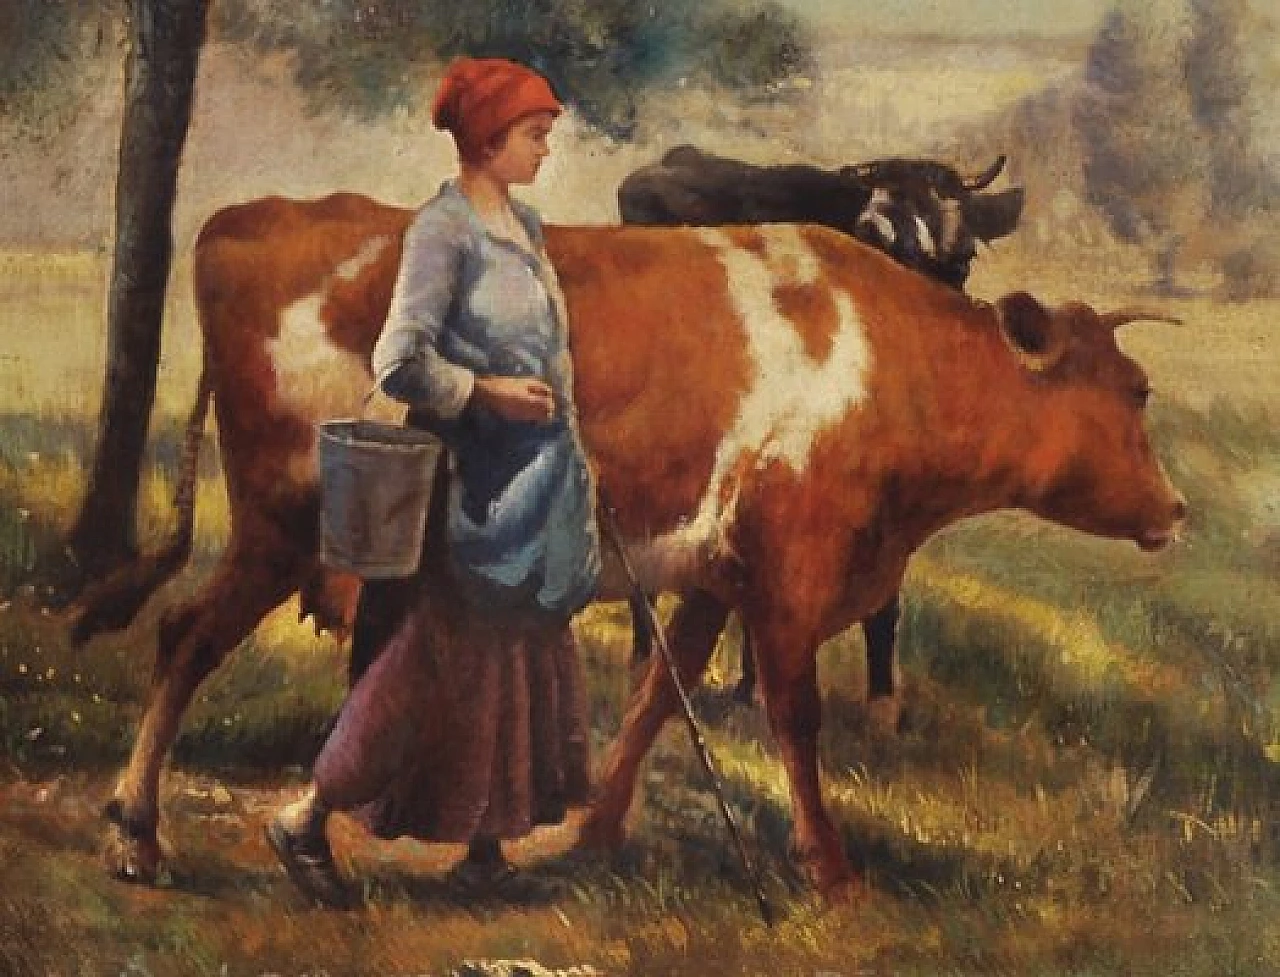 Emilio Pergola, country landscape, oil painting on canvas, 2005 3